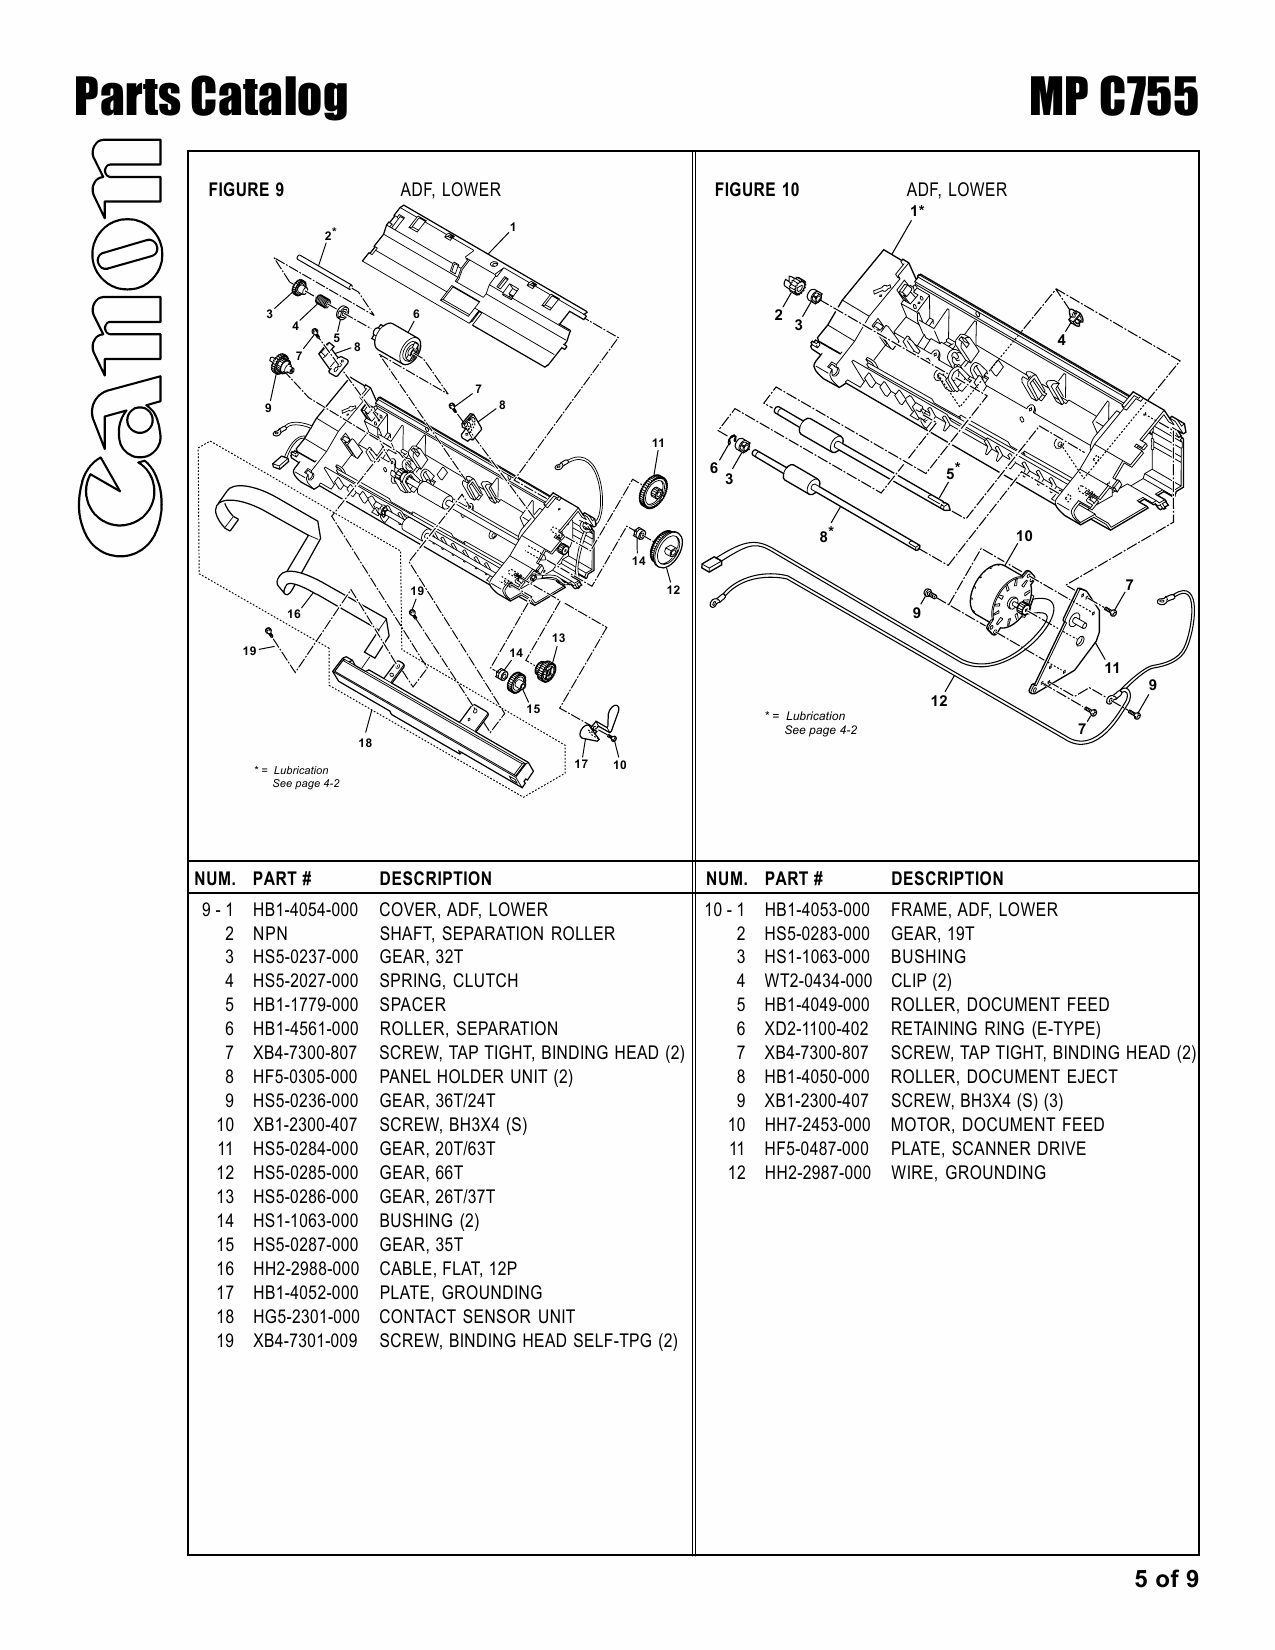 Canon MultiPASS MP-C755 Parts Catalog Manual-5